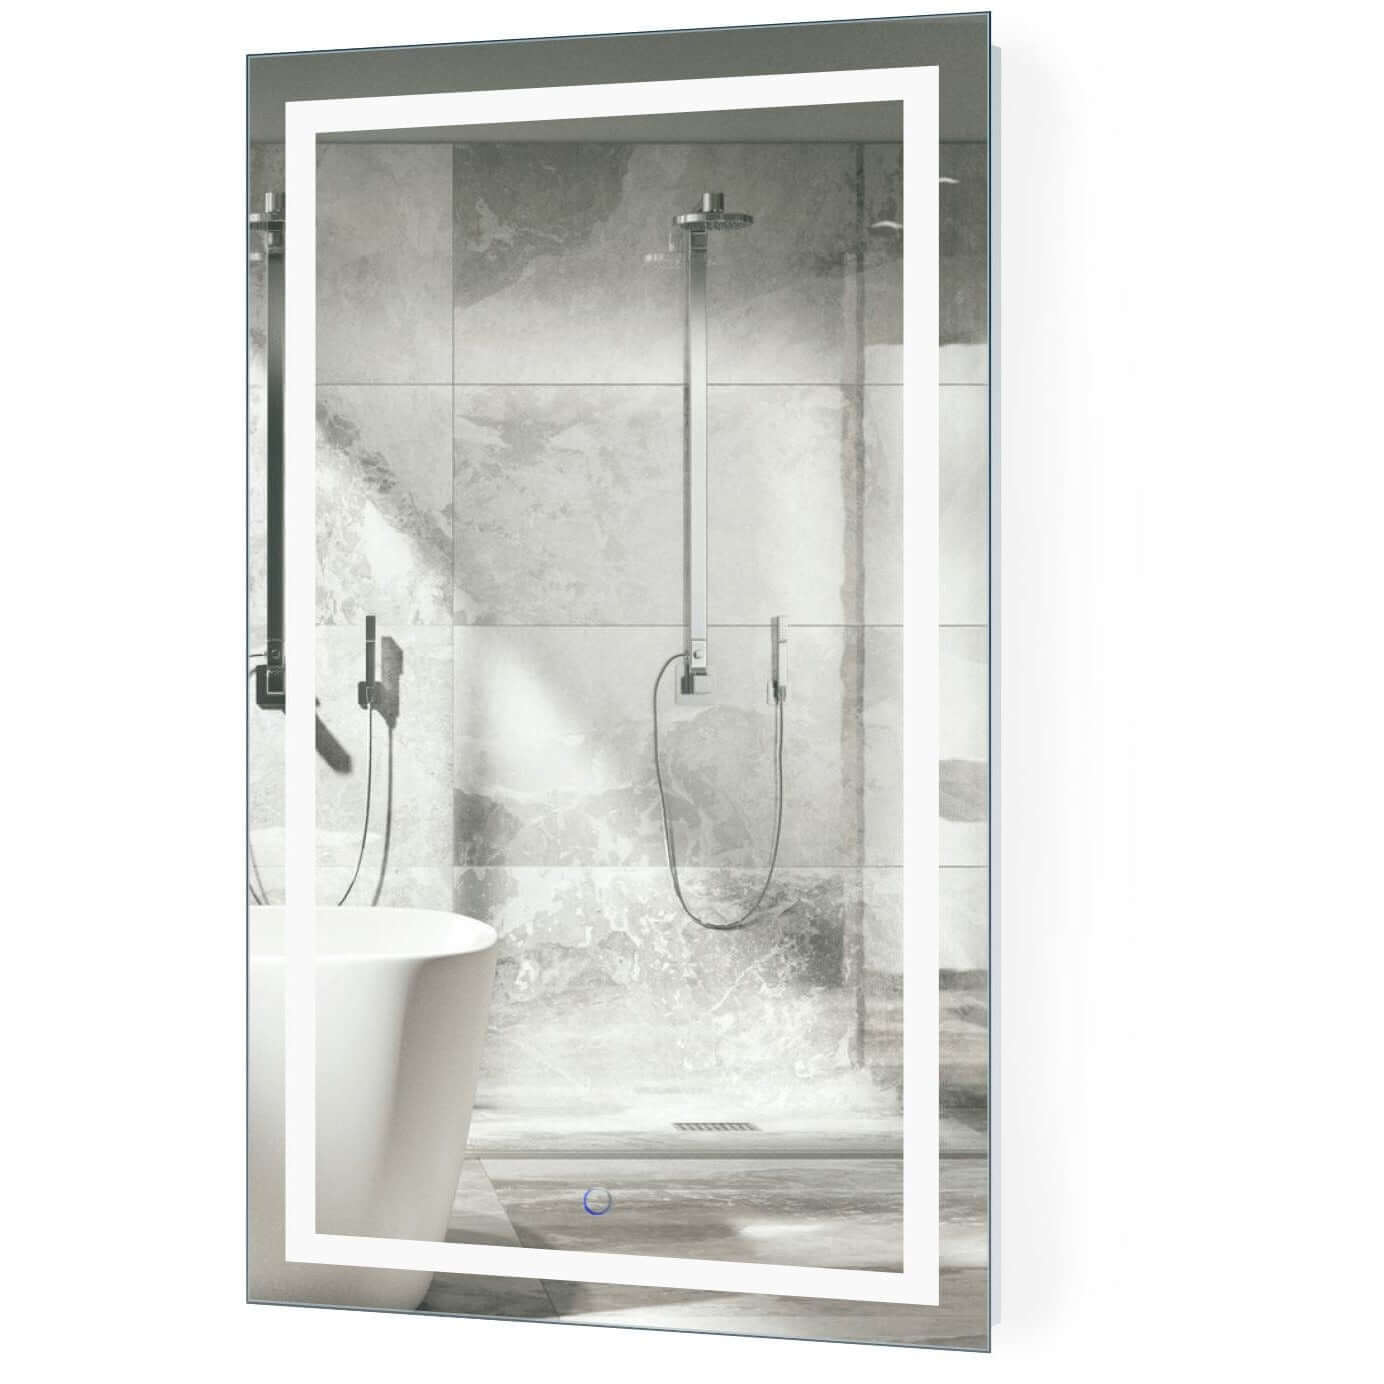 Krugg Icon 2442 LED mirror vertically mounted in sleek bathroom setting